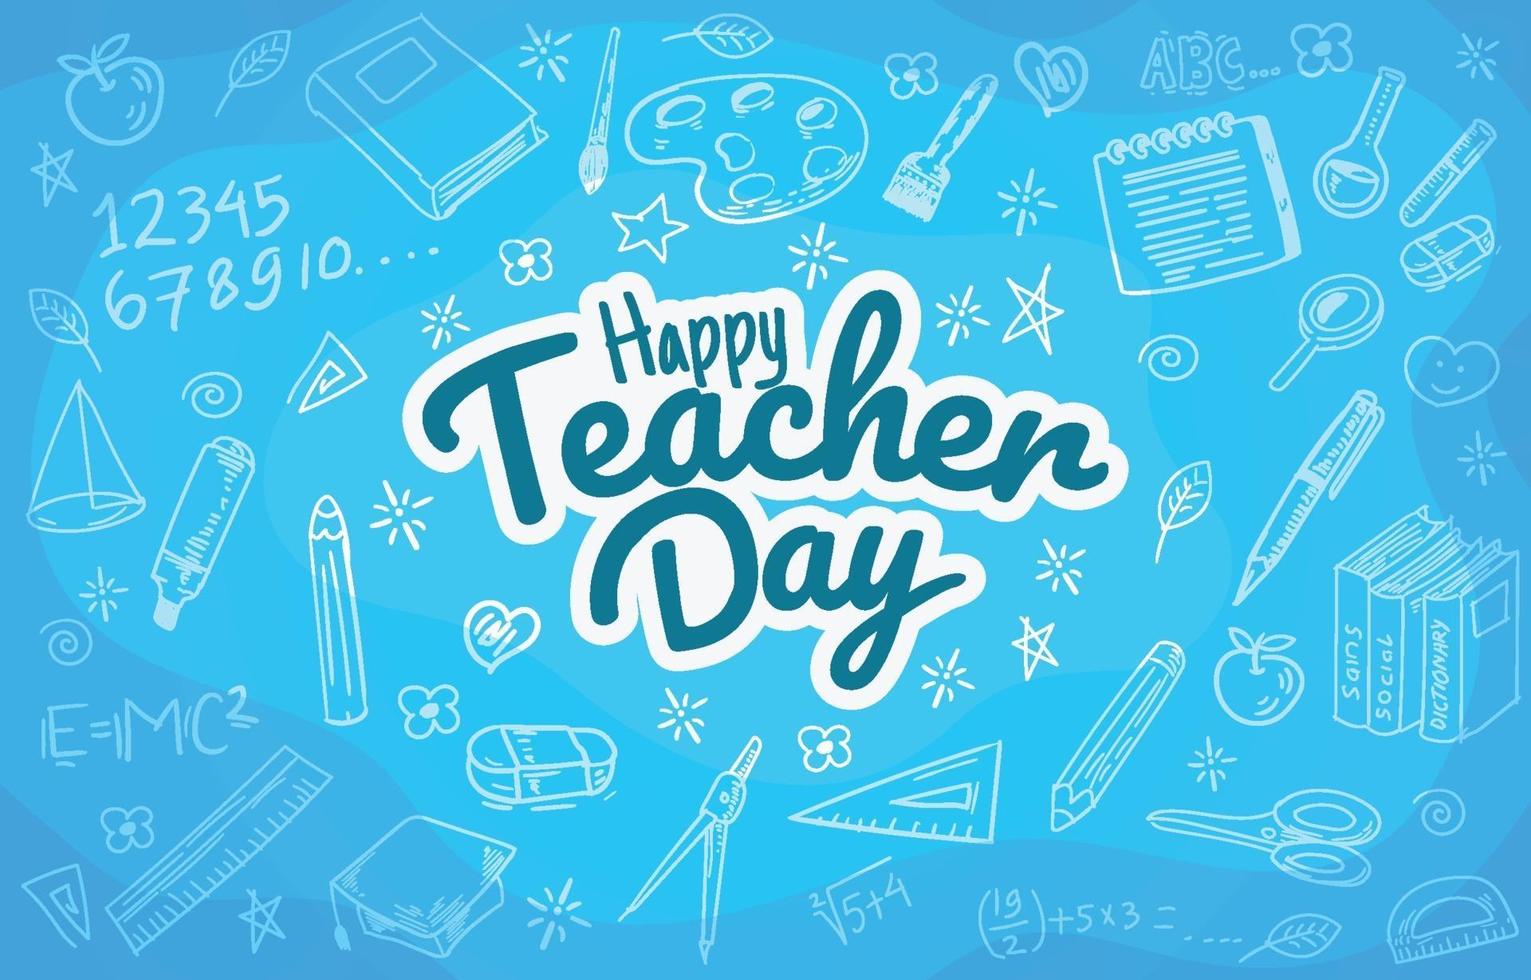 Happy Teacher Day Background vector